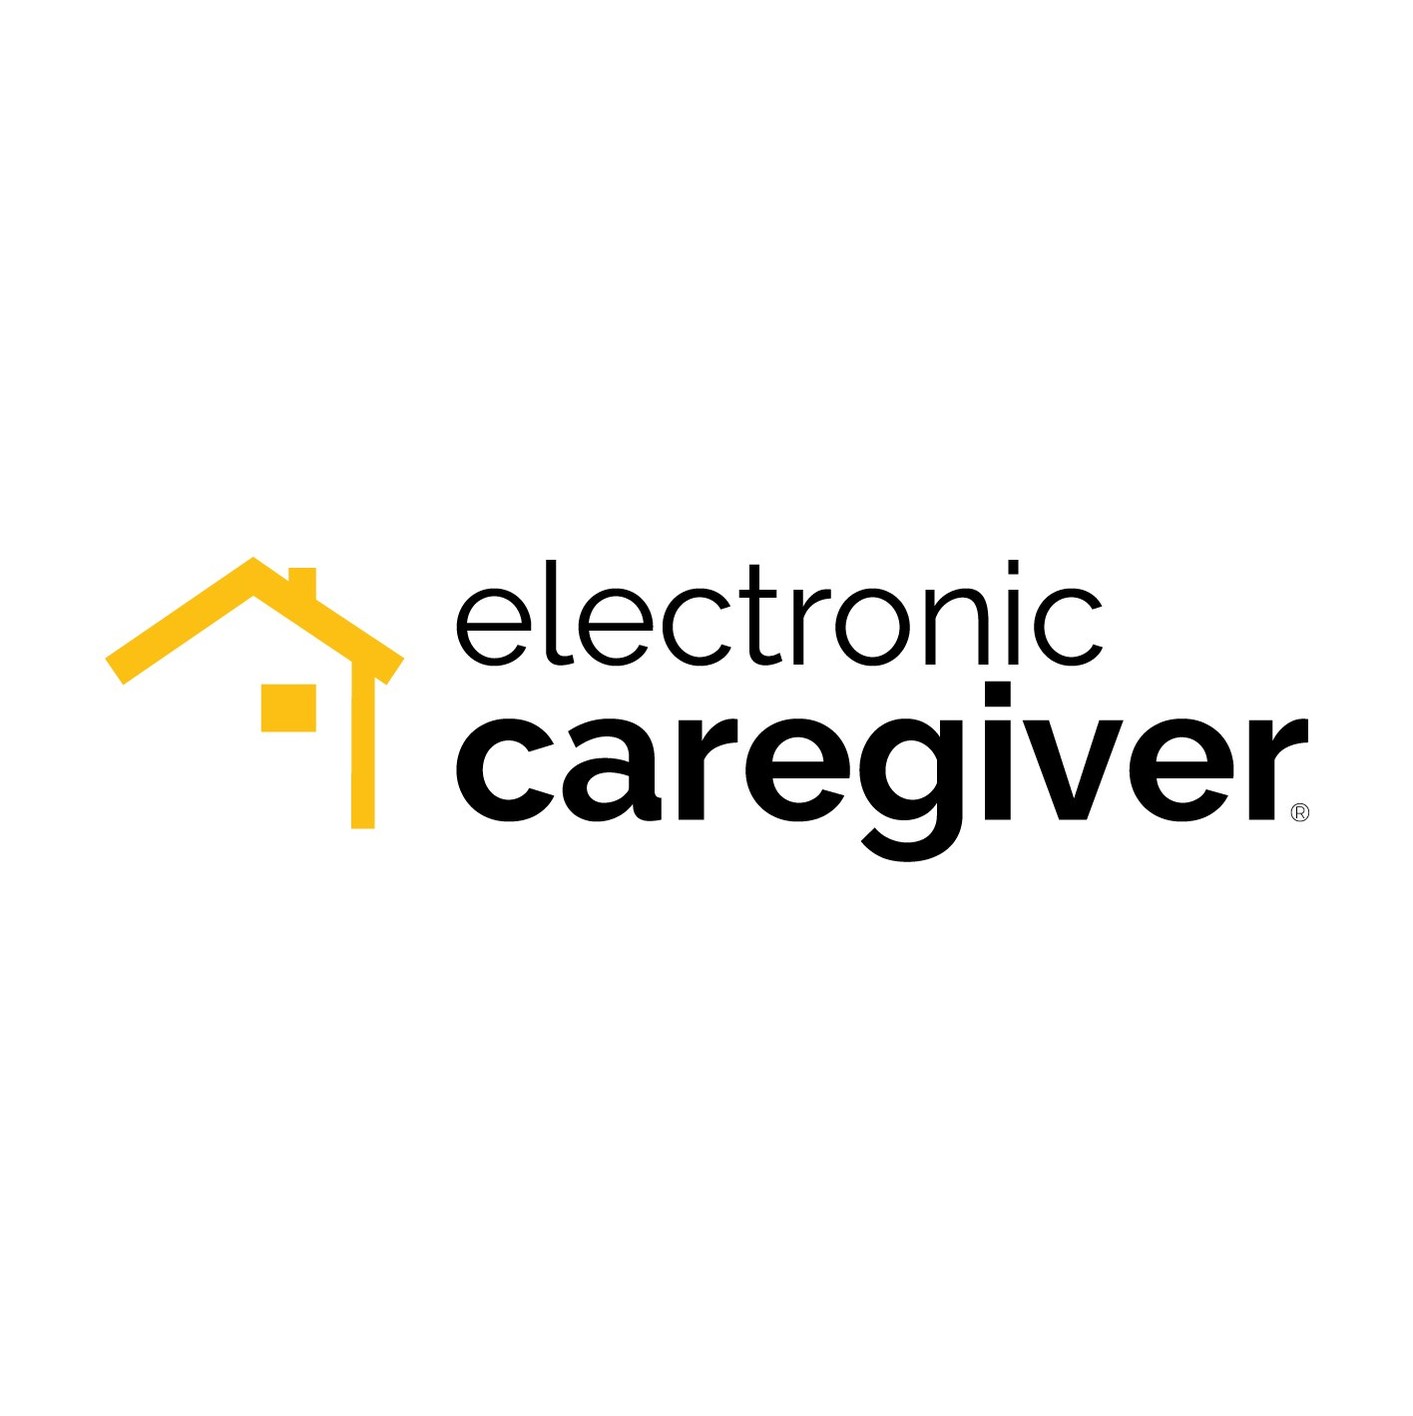 New Partnership with Electronic Caregiver